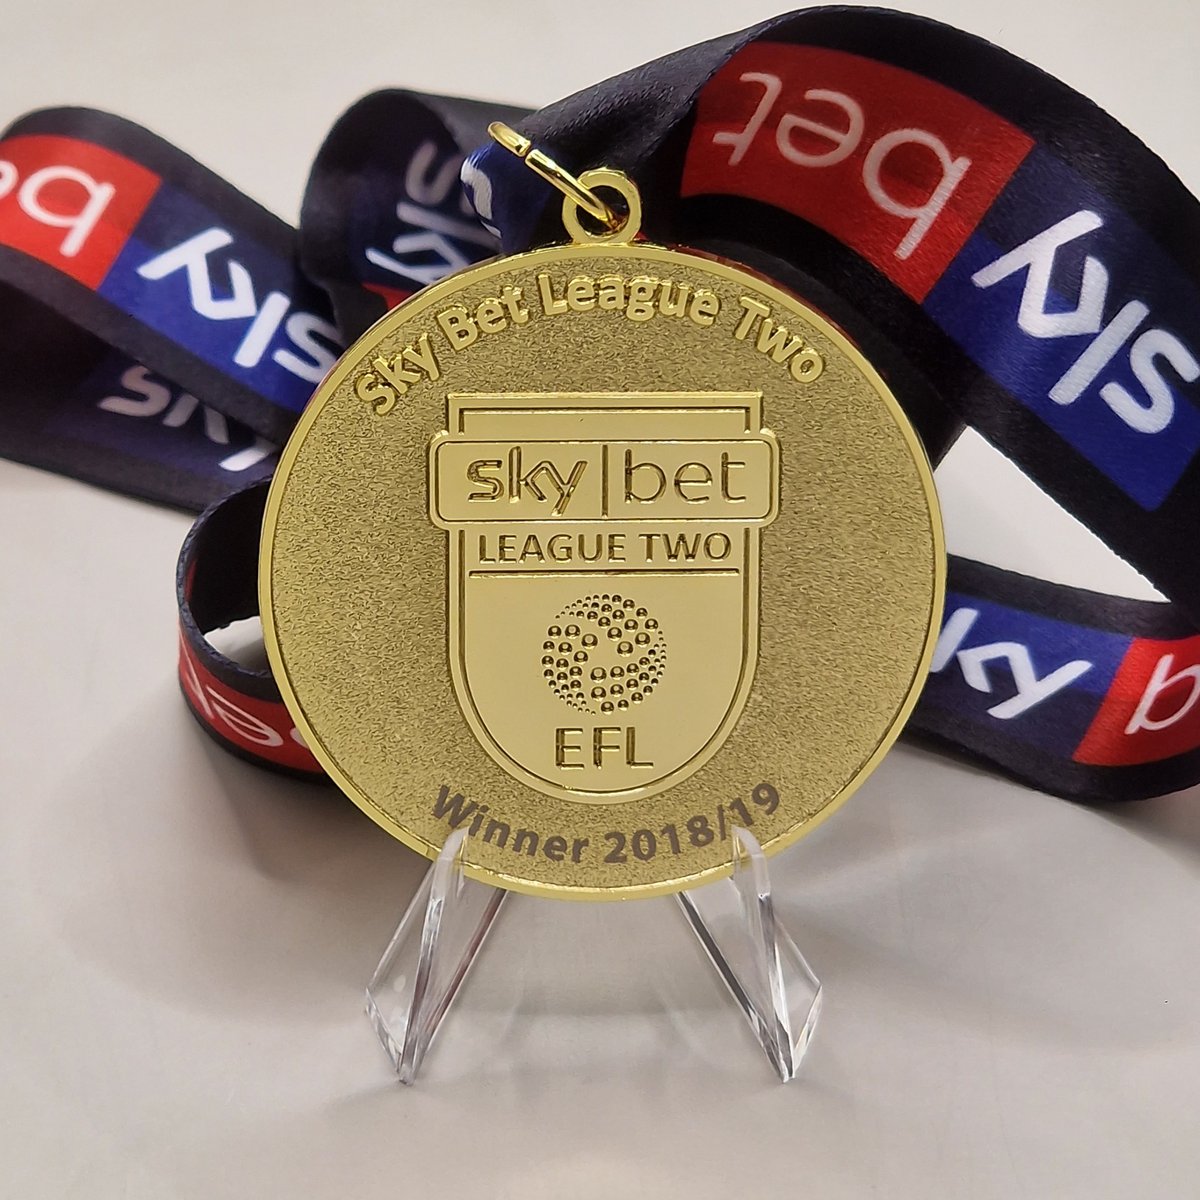 The 2018/19 Sky Bet Championship